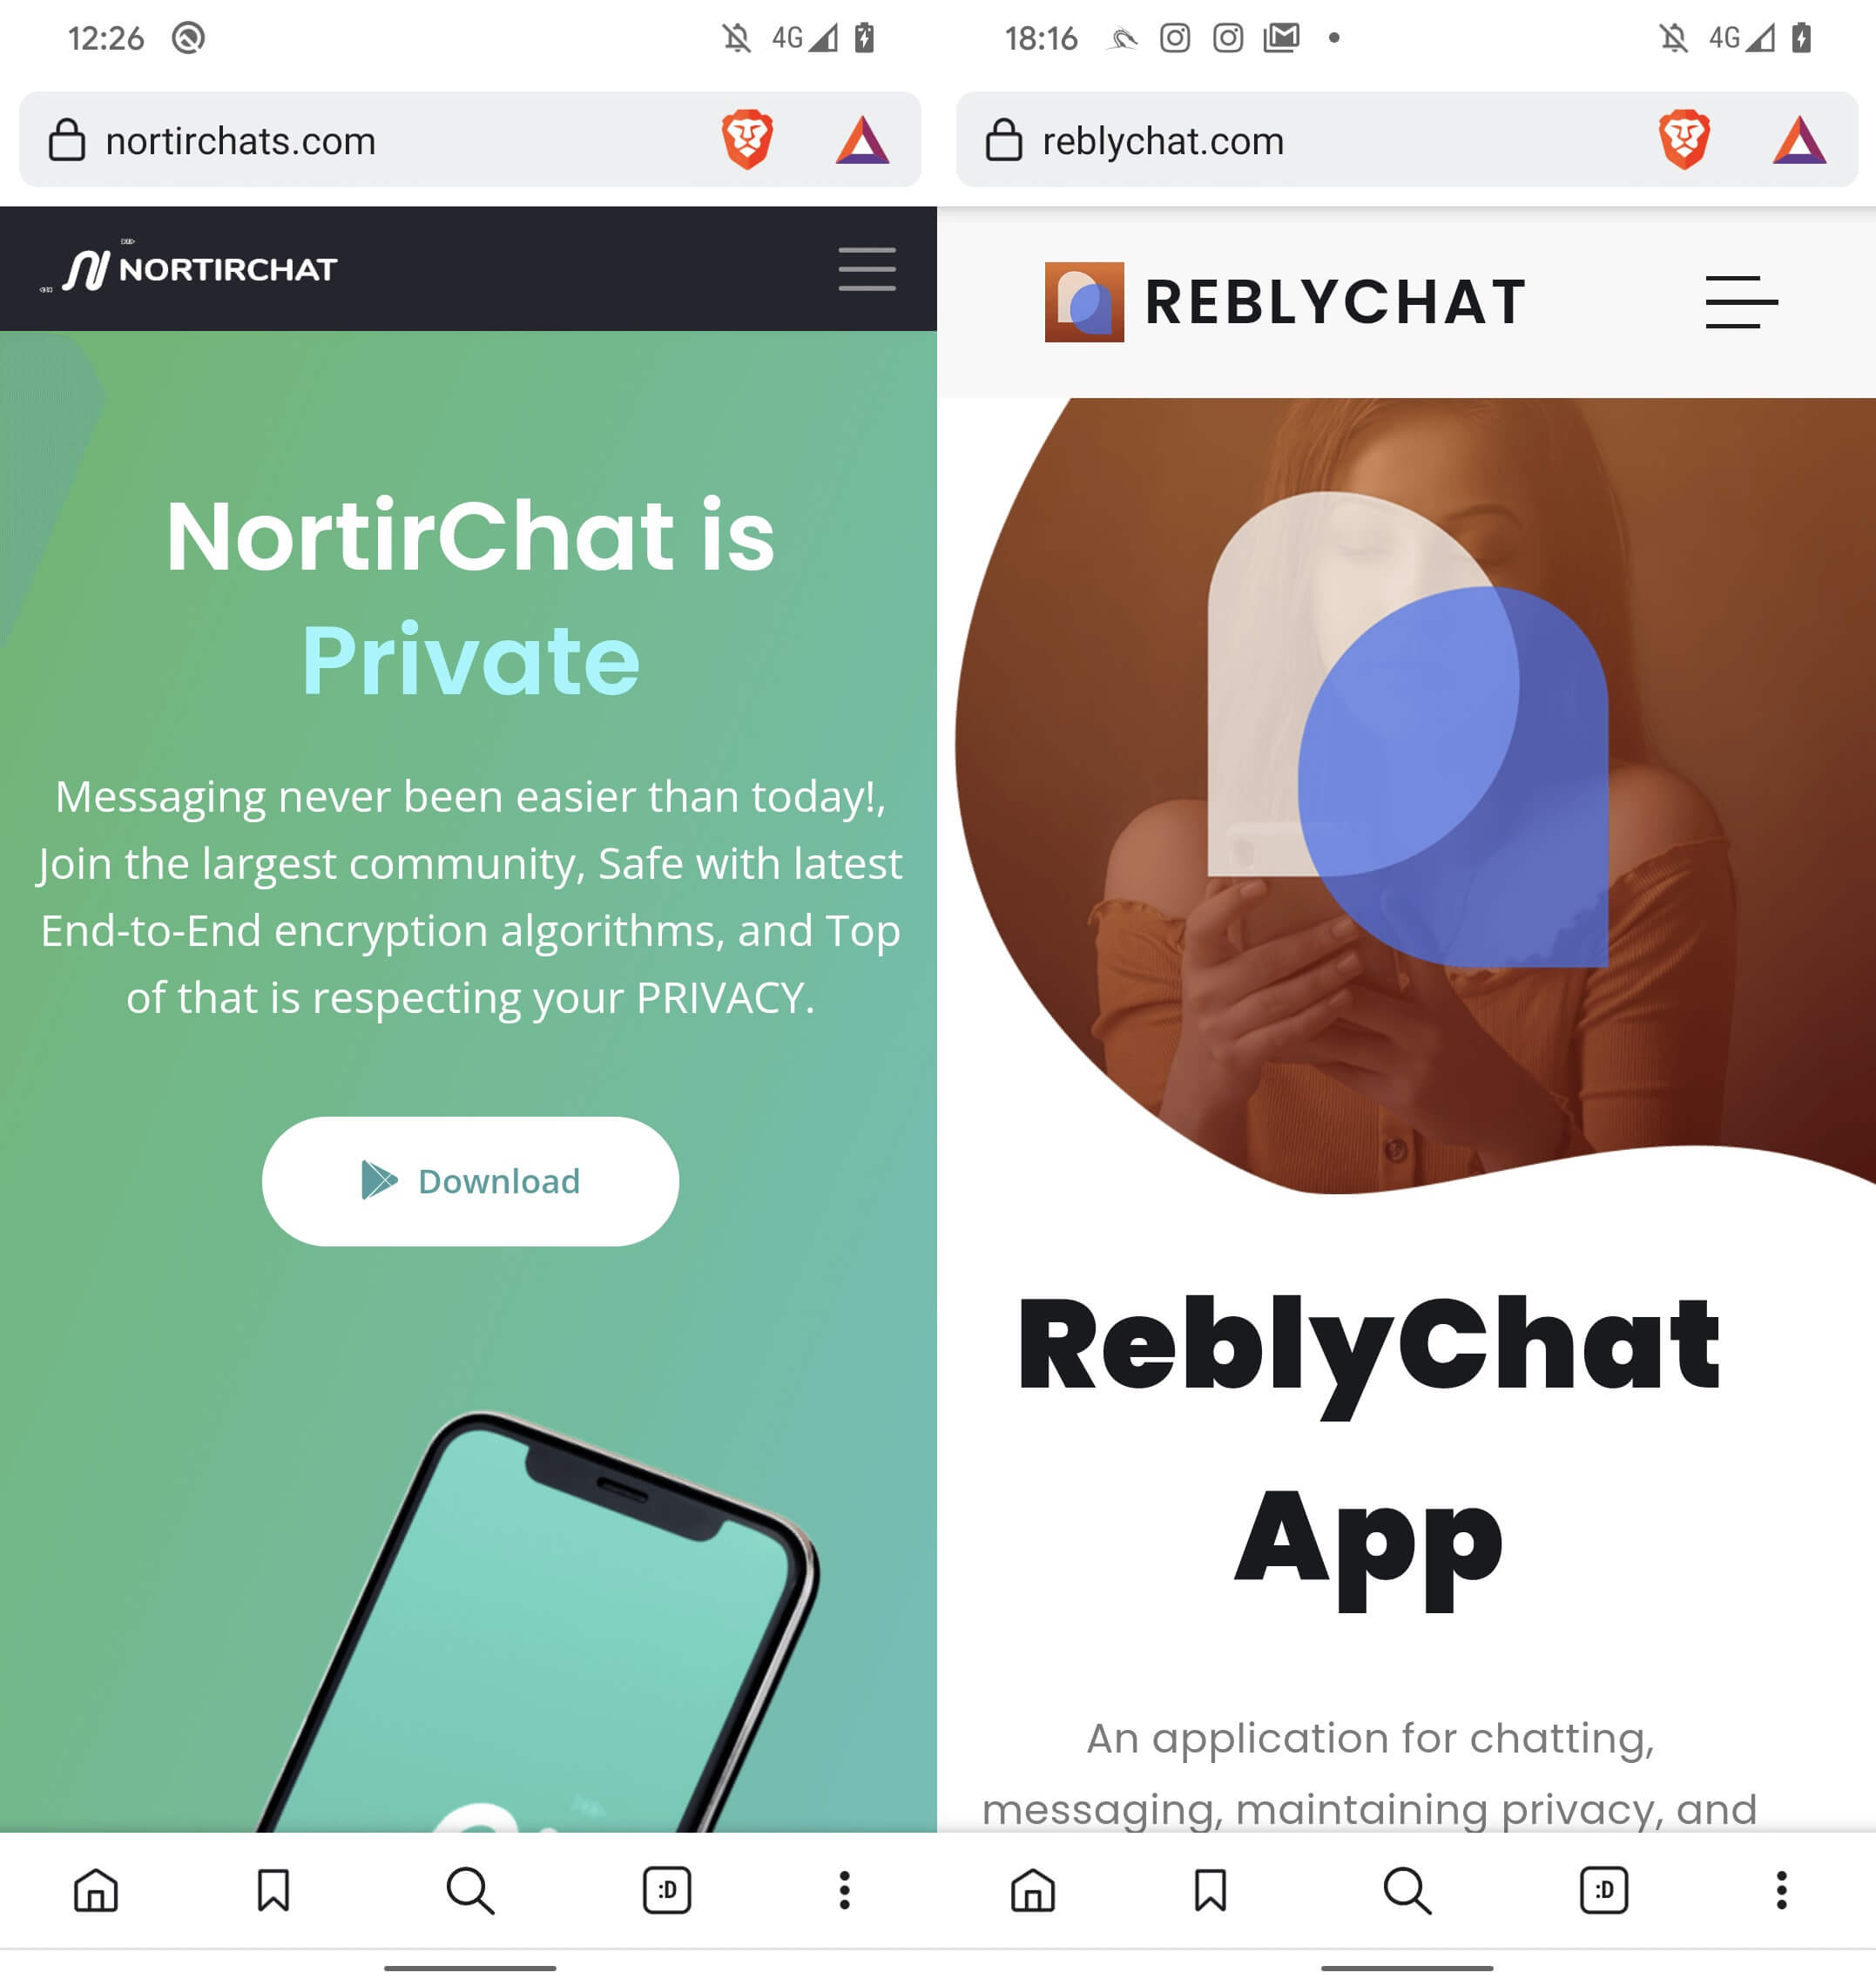 Figure 5. NortirChat (left) and ReblyChat (right) distribution websites